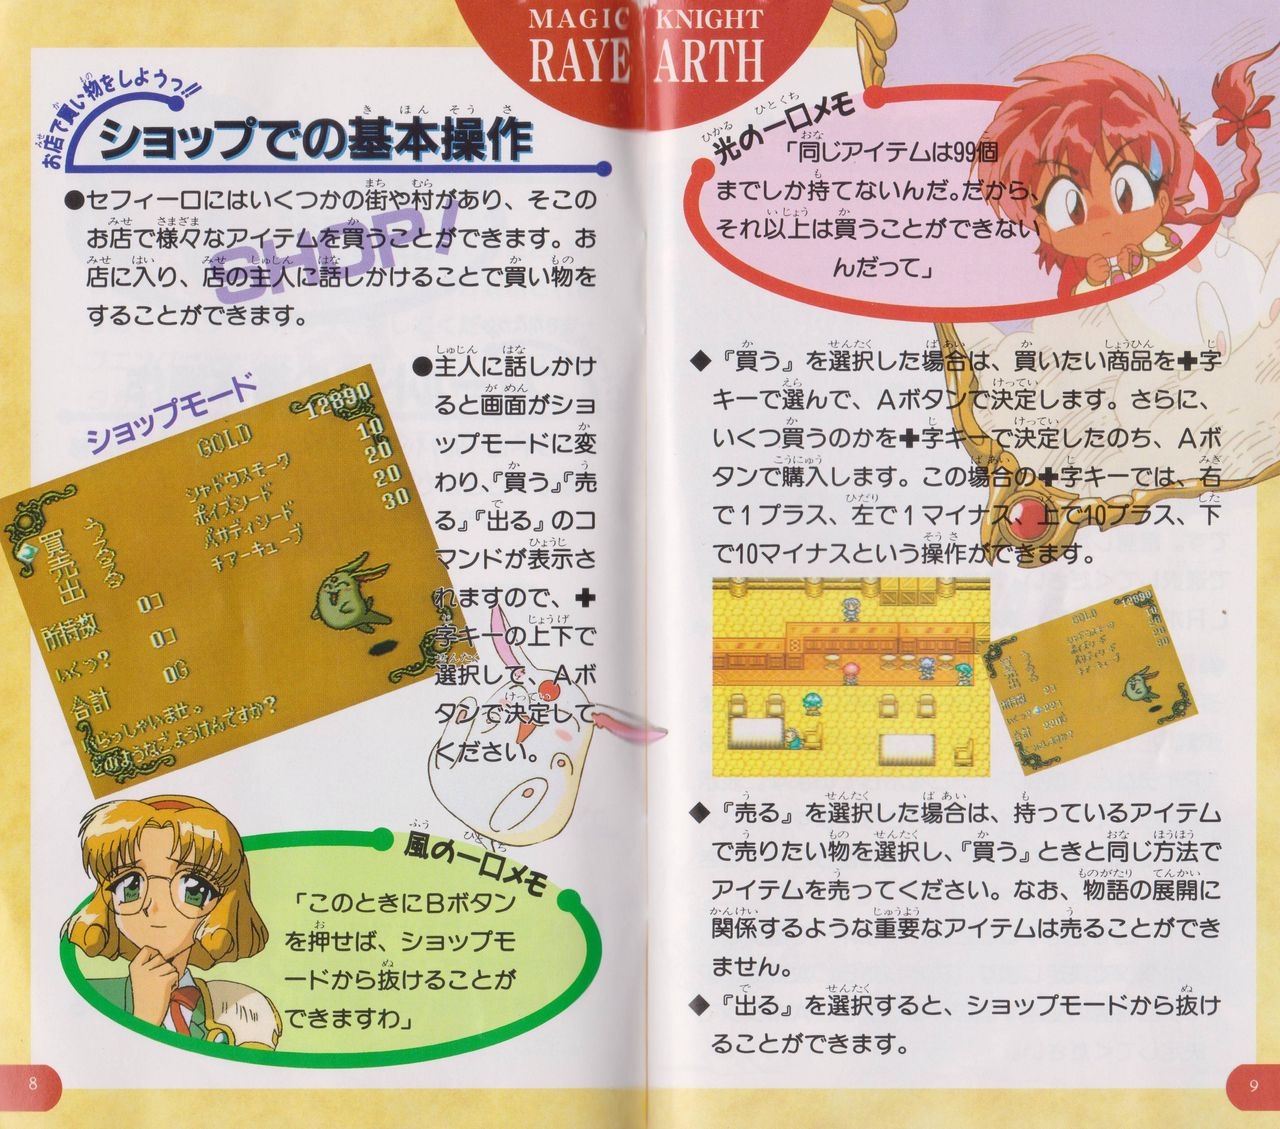 Magic Knight Rayearth - Box & Manual Scans [Super Famicom] 7